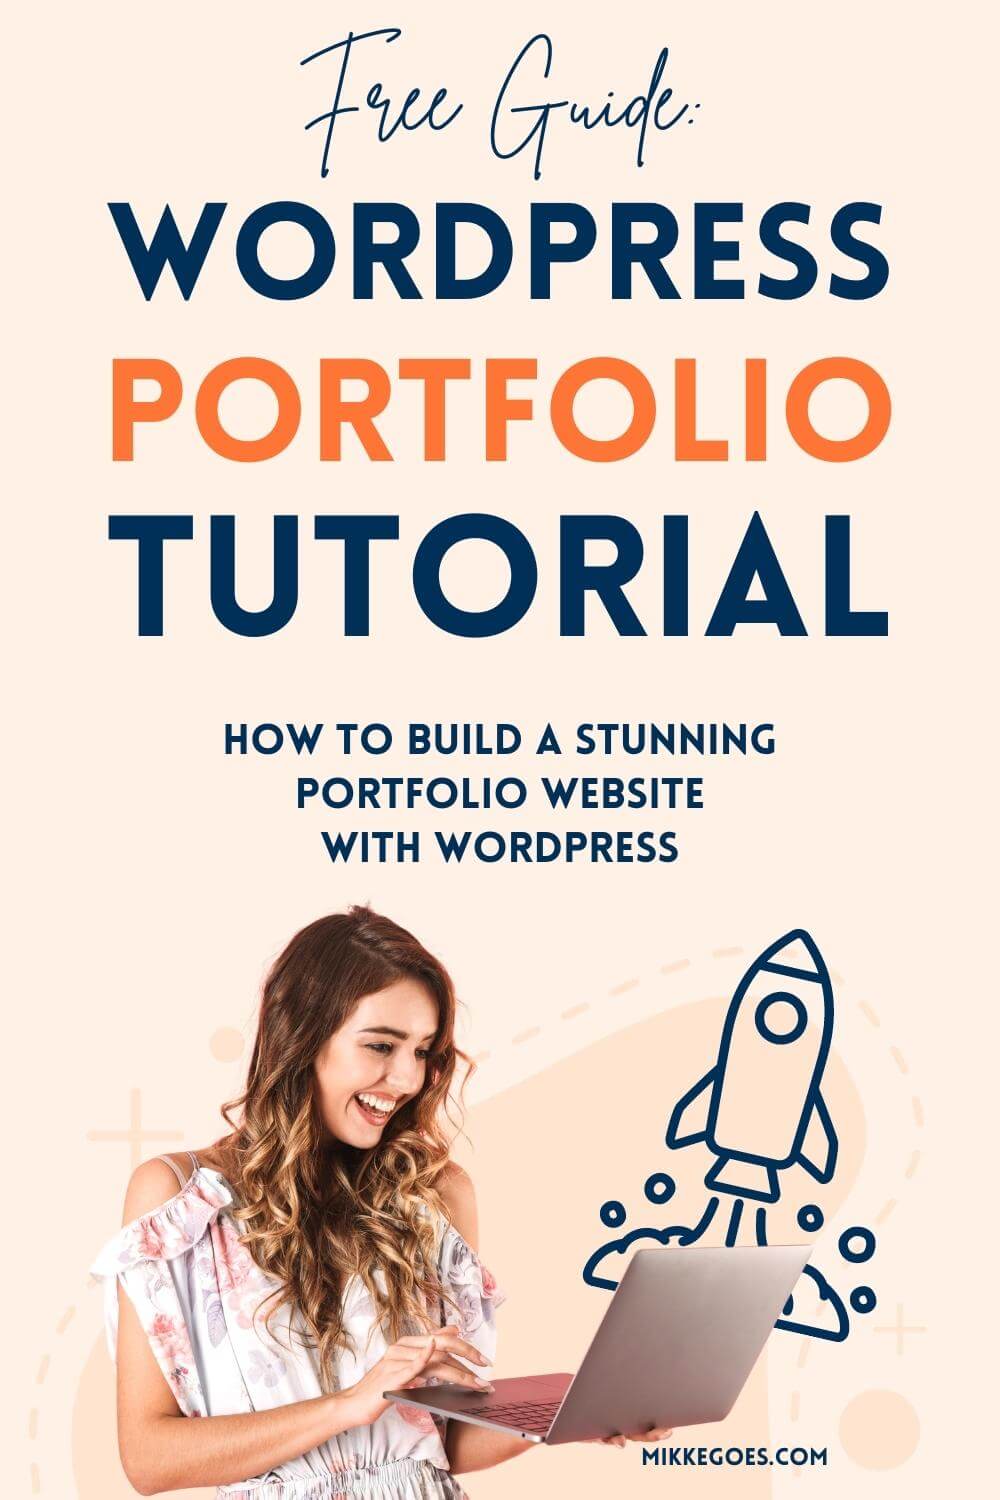 Free WordPress portfolio website tutorial – Build a beautiful portfolio website with WordPress step-by-step